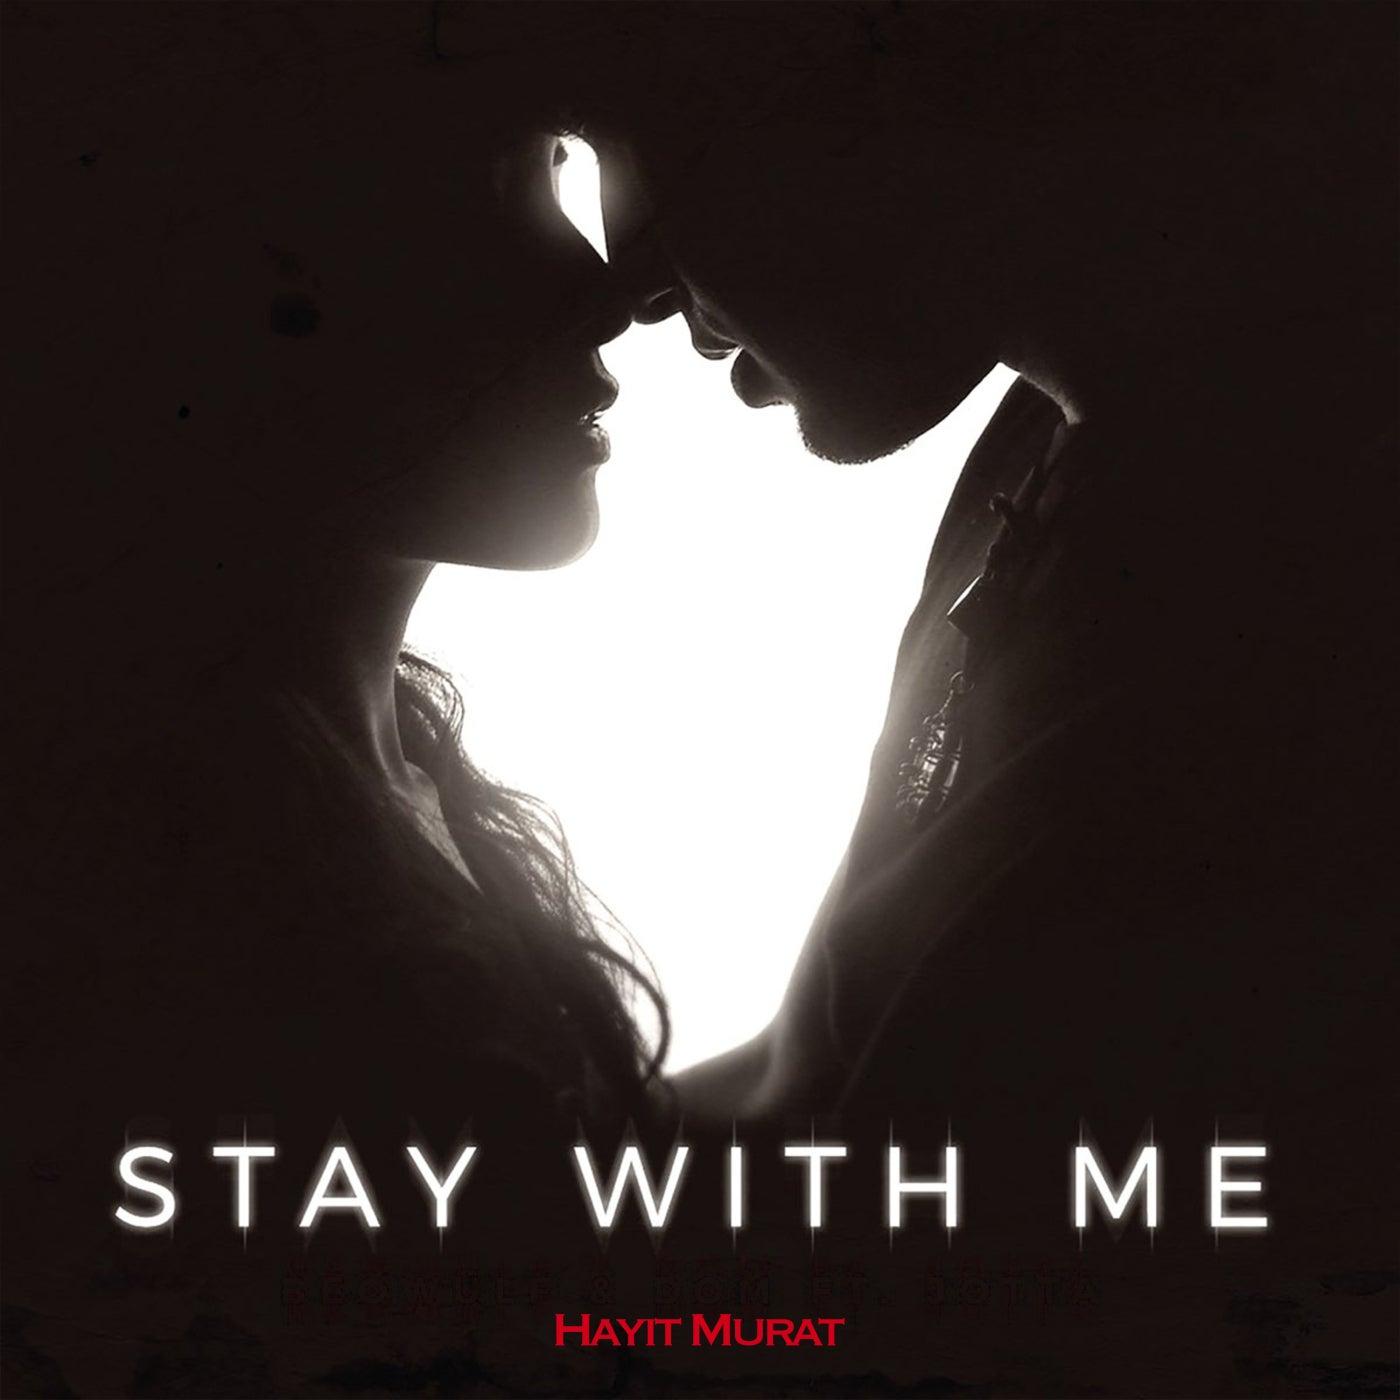 Stay with me say with me. Stay with me. Stay with me альбом. Slaywitme. Stay with me надпись.